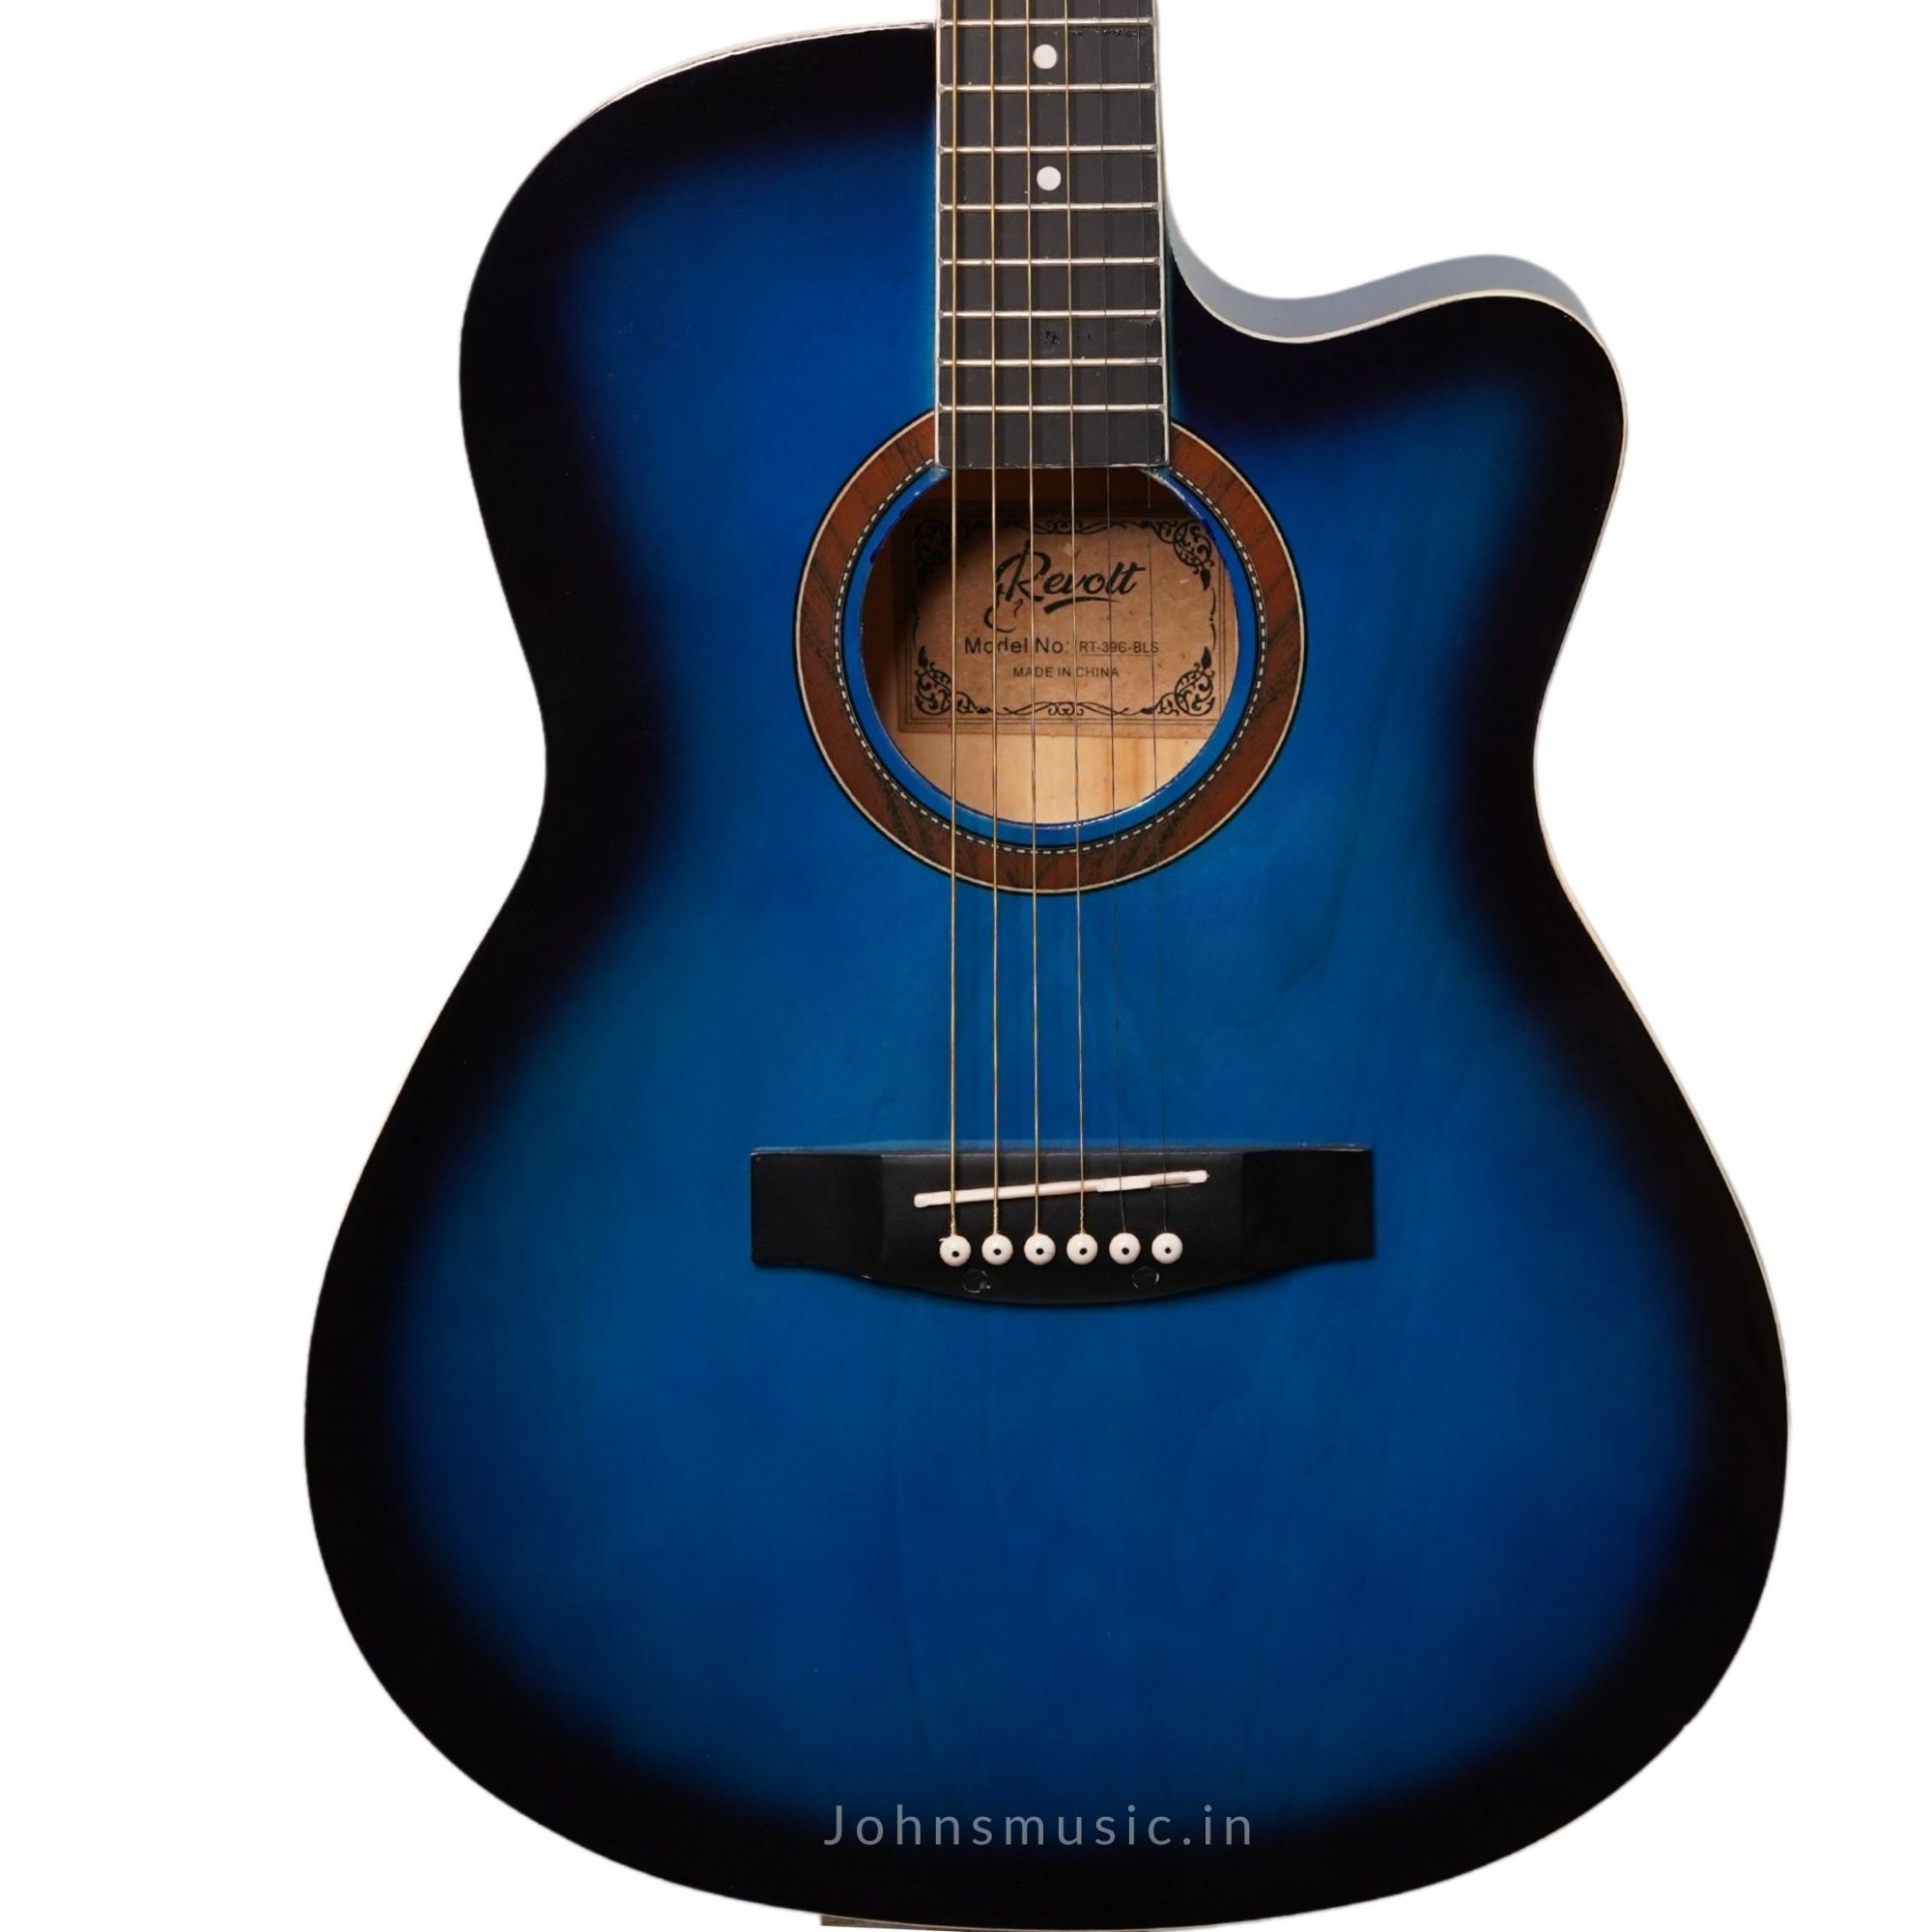 Revolt Rt39c acoustic guitar online price in india